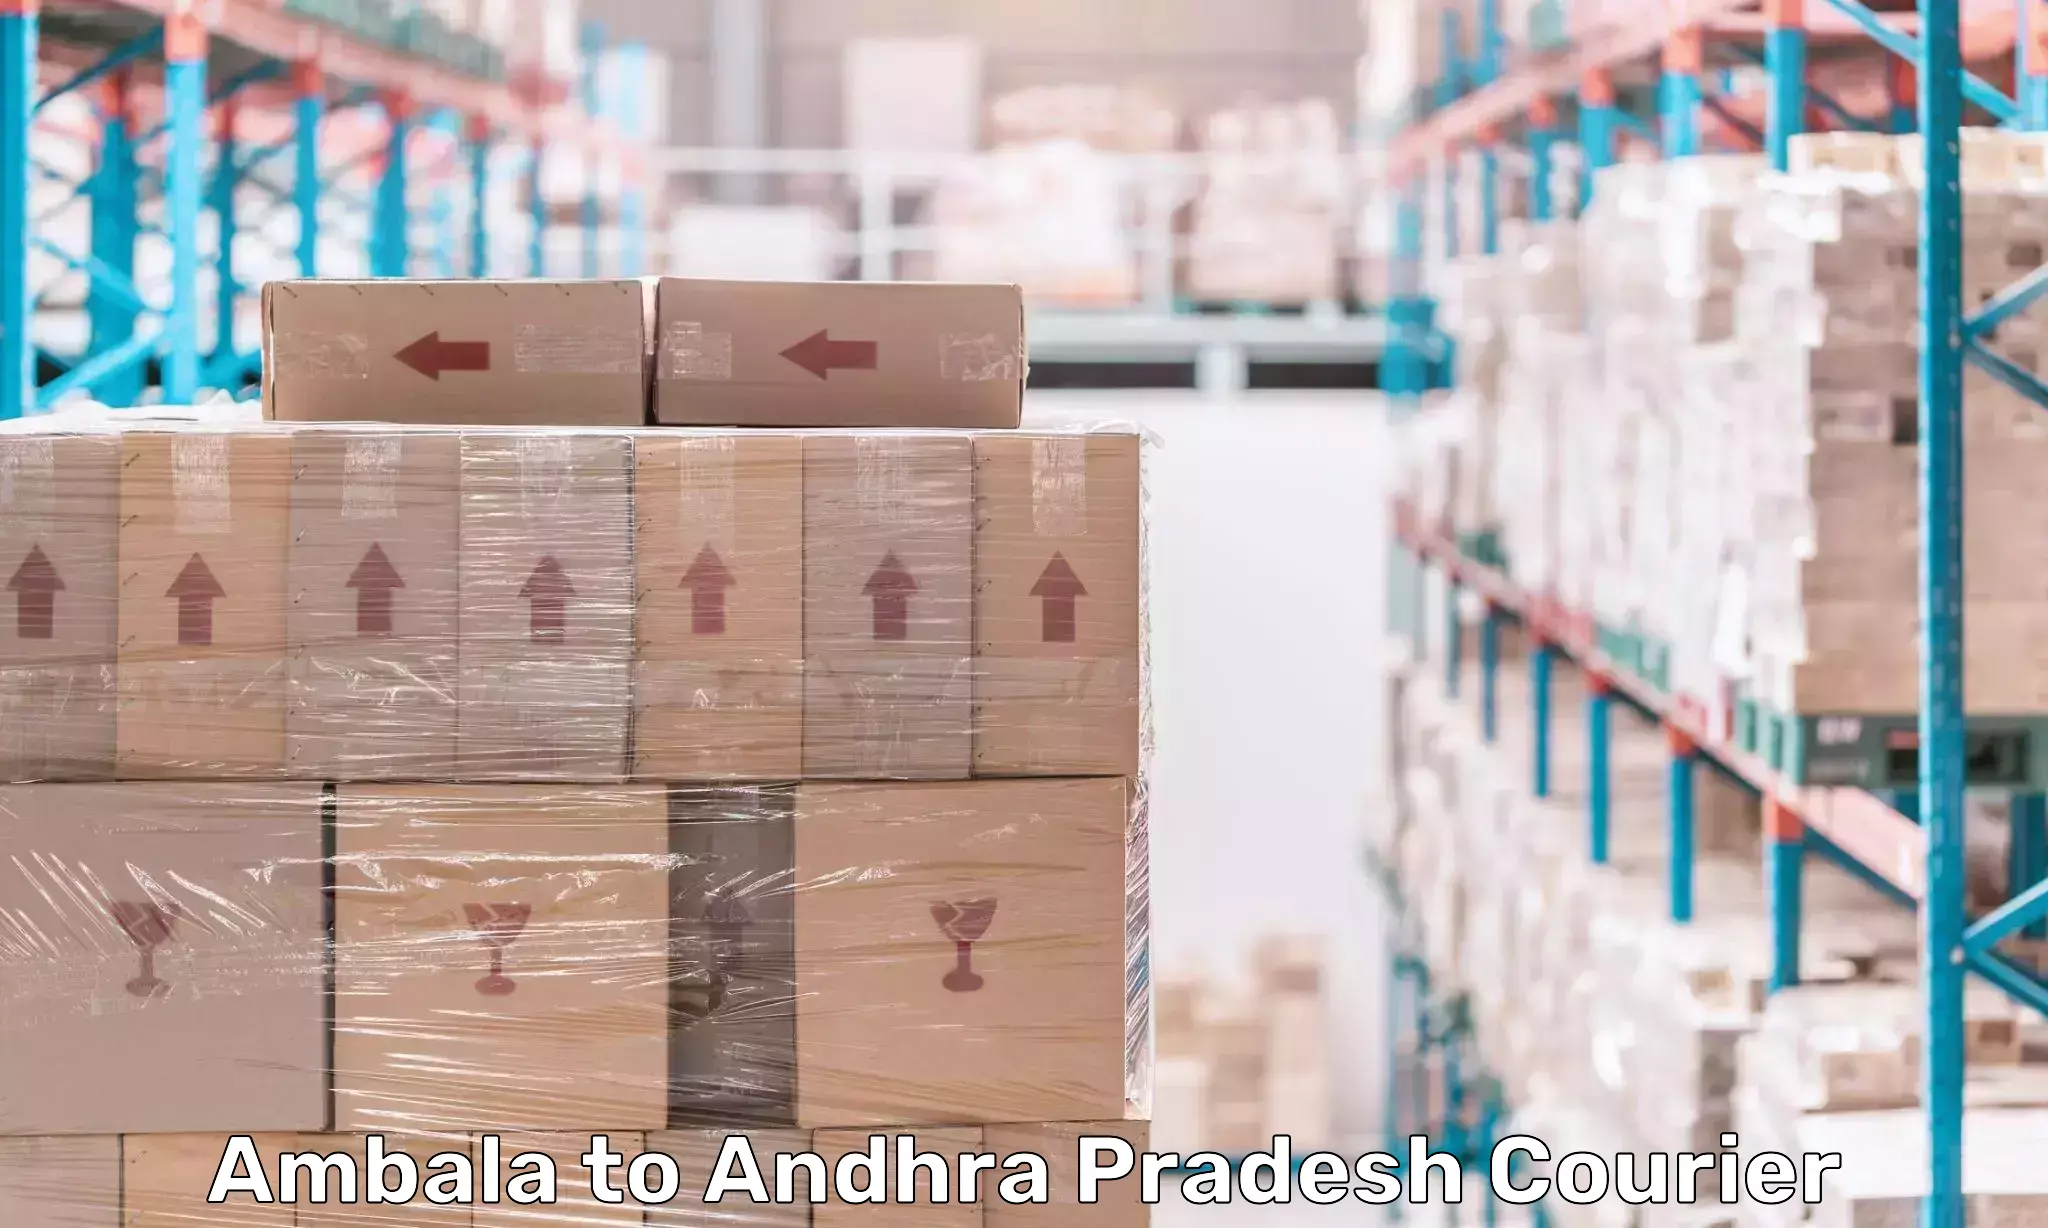 Digital shipping tools Ambala to Visakhapatnam Port